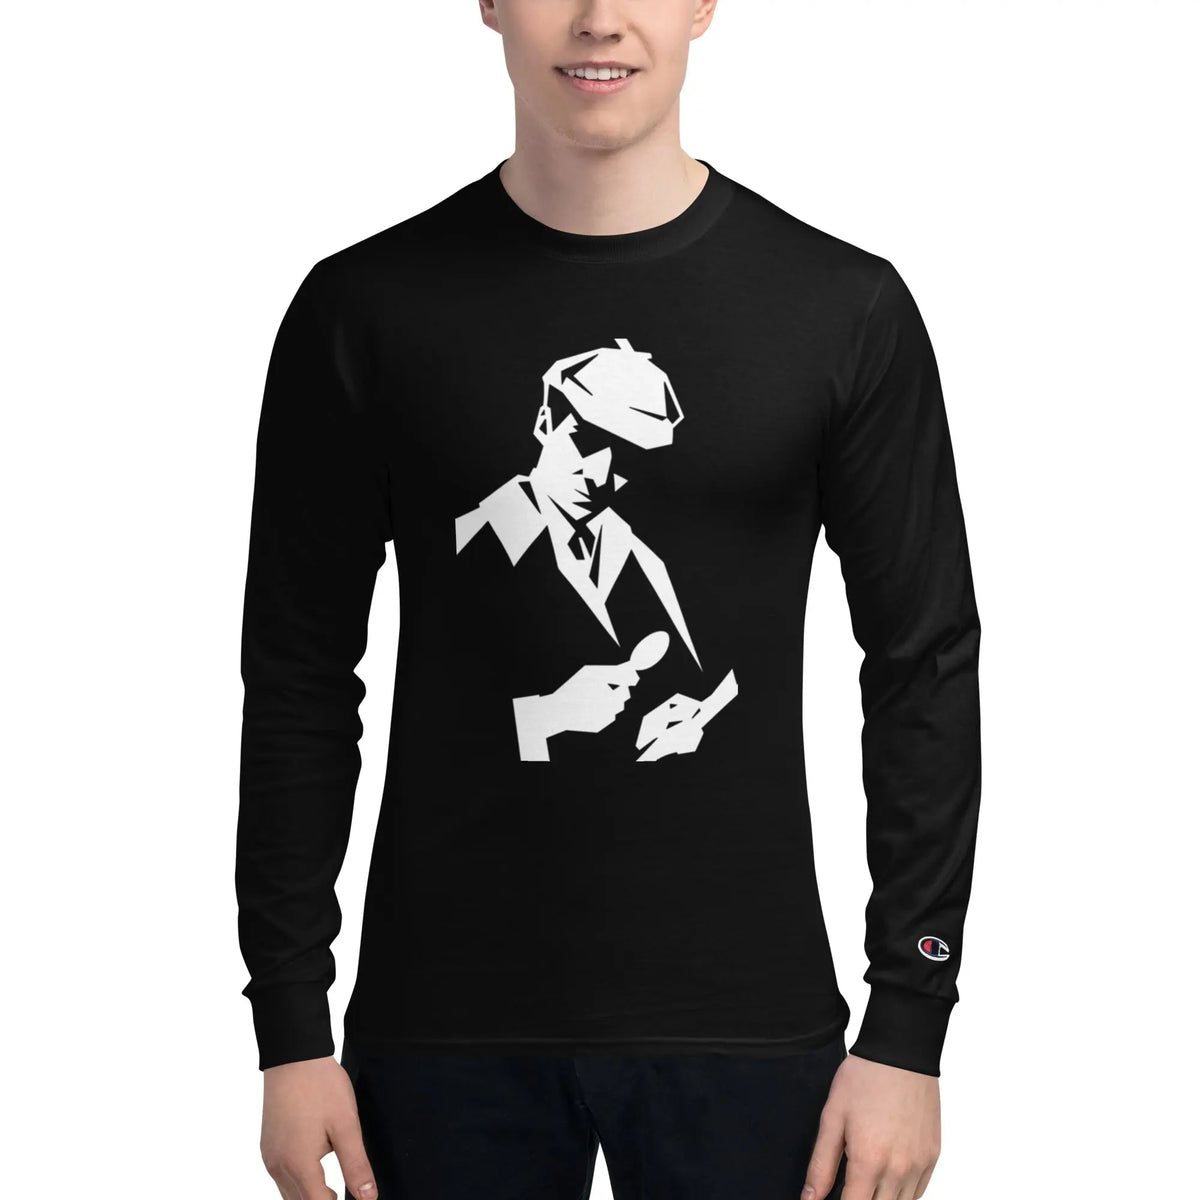 Men's Champion Long Sleeve Shirt - The Sherlock Holmes Company